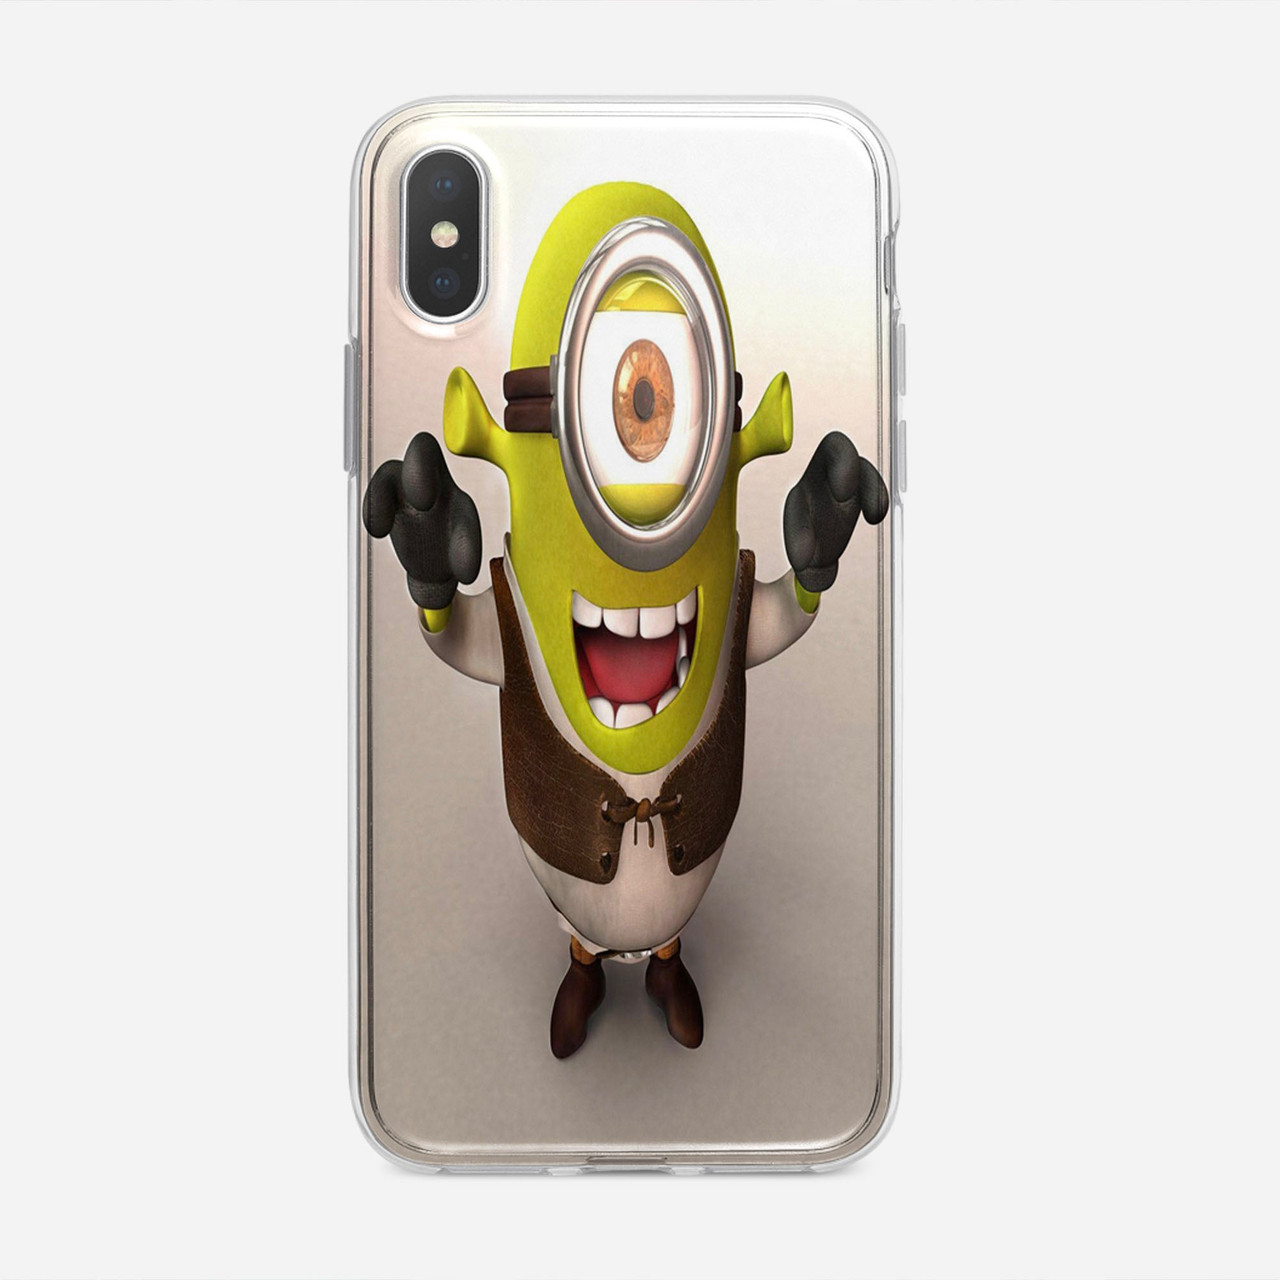 Funny Minion Wallpaper Shrek iPhone XS Max Case